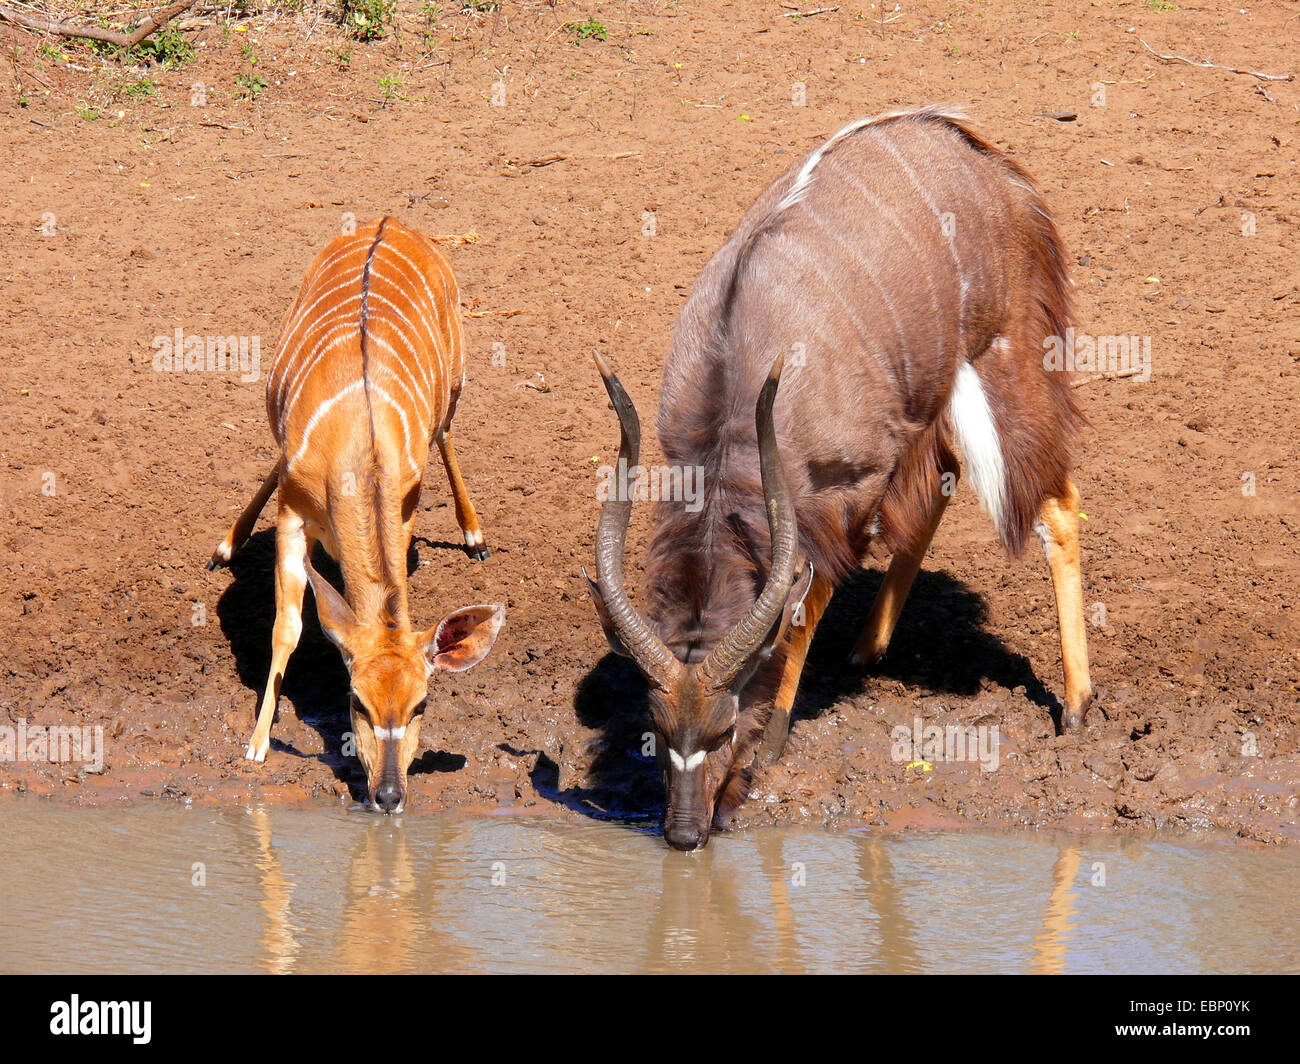 nyala (Tragelaphus angasi), male and female at the waterhole, South Africa Stock Photo